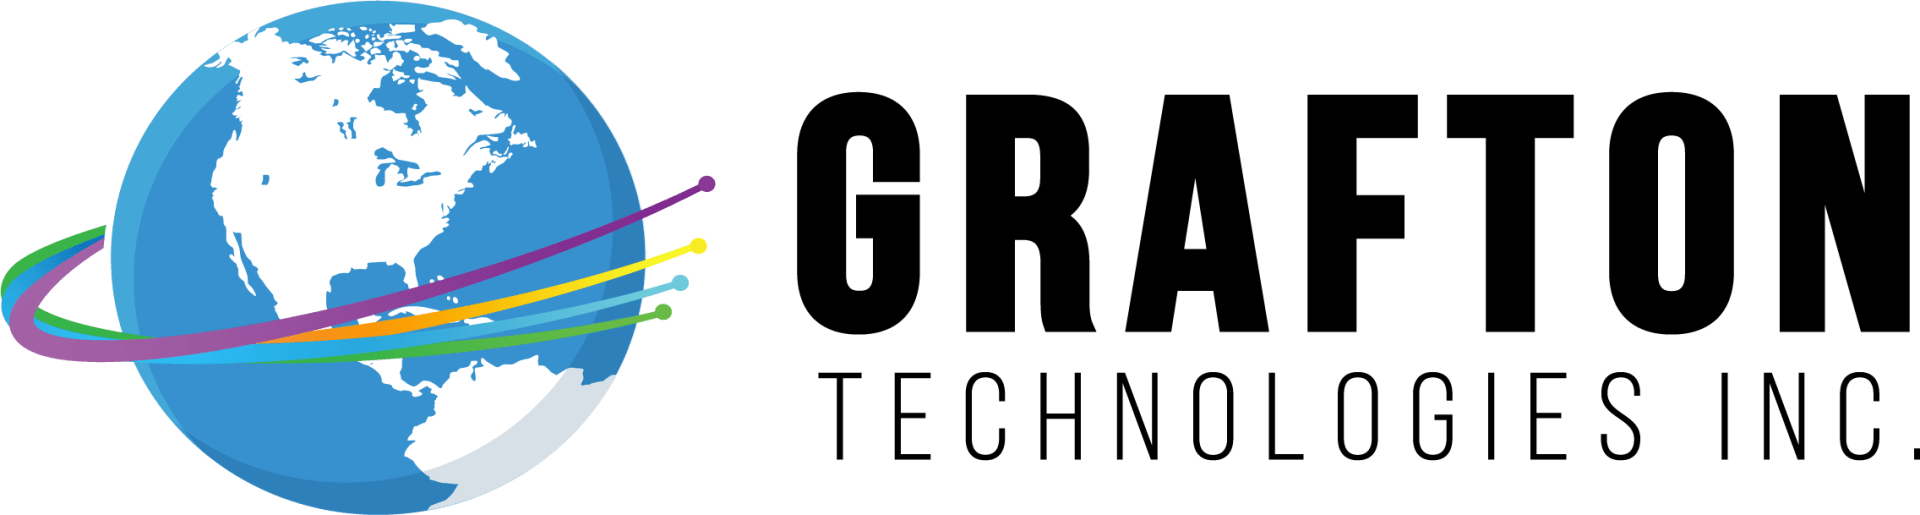 Grafton Technologies, Inc logo